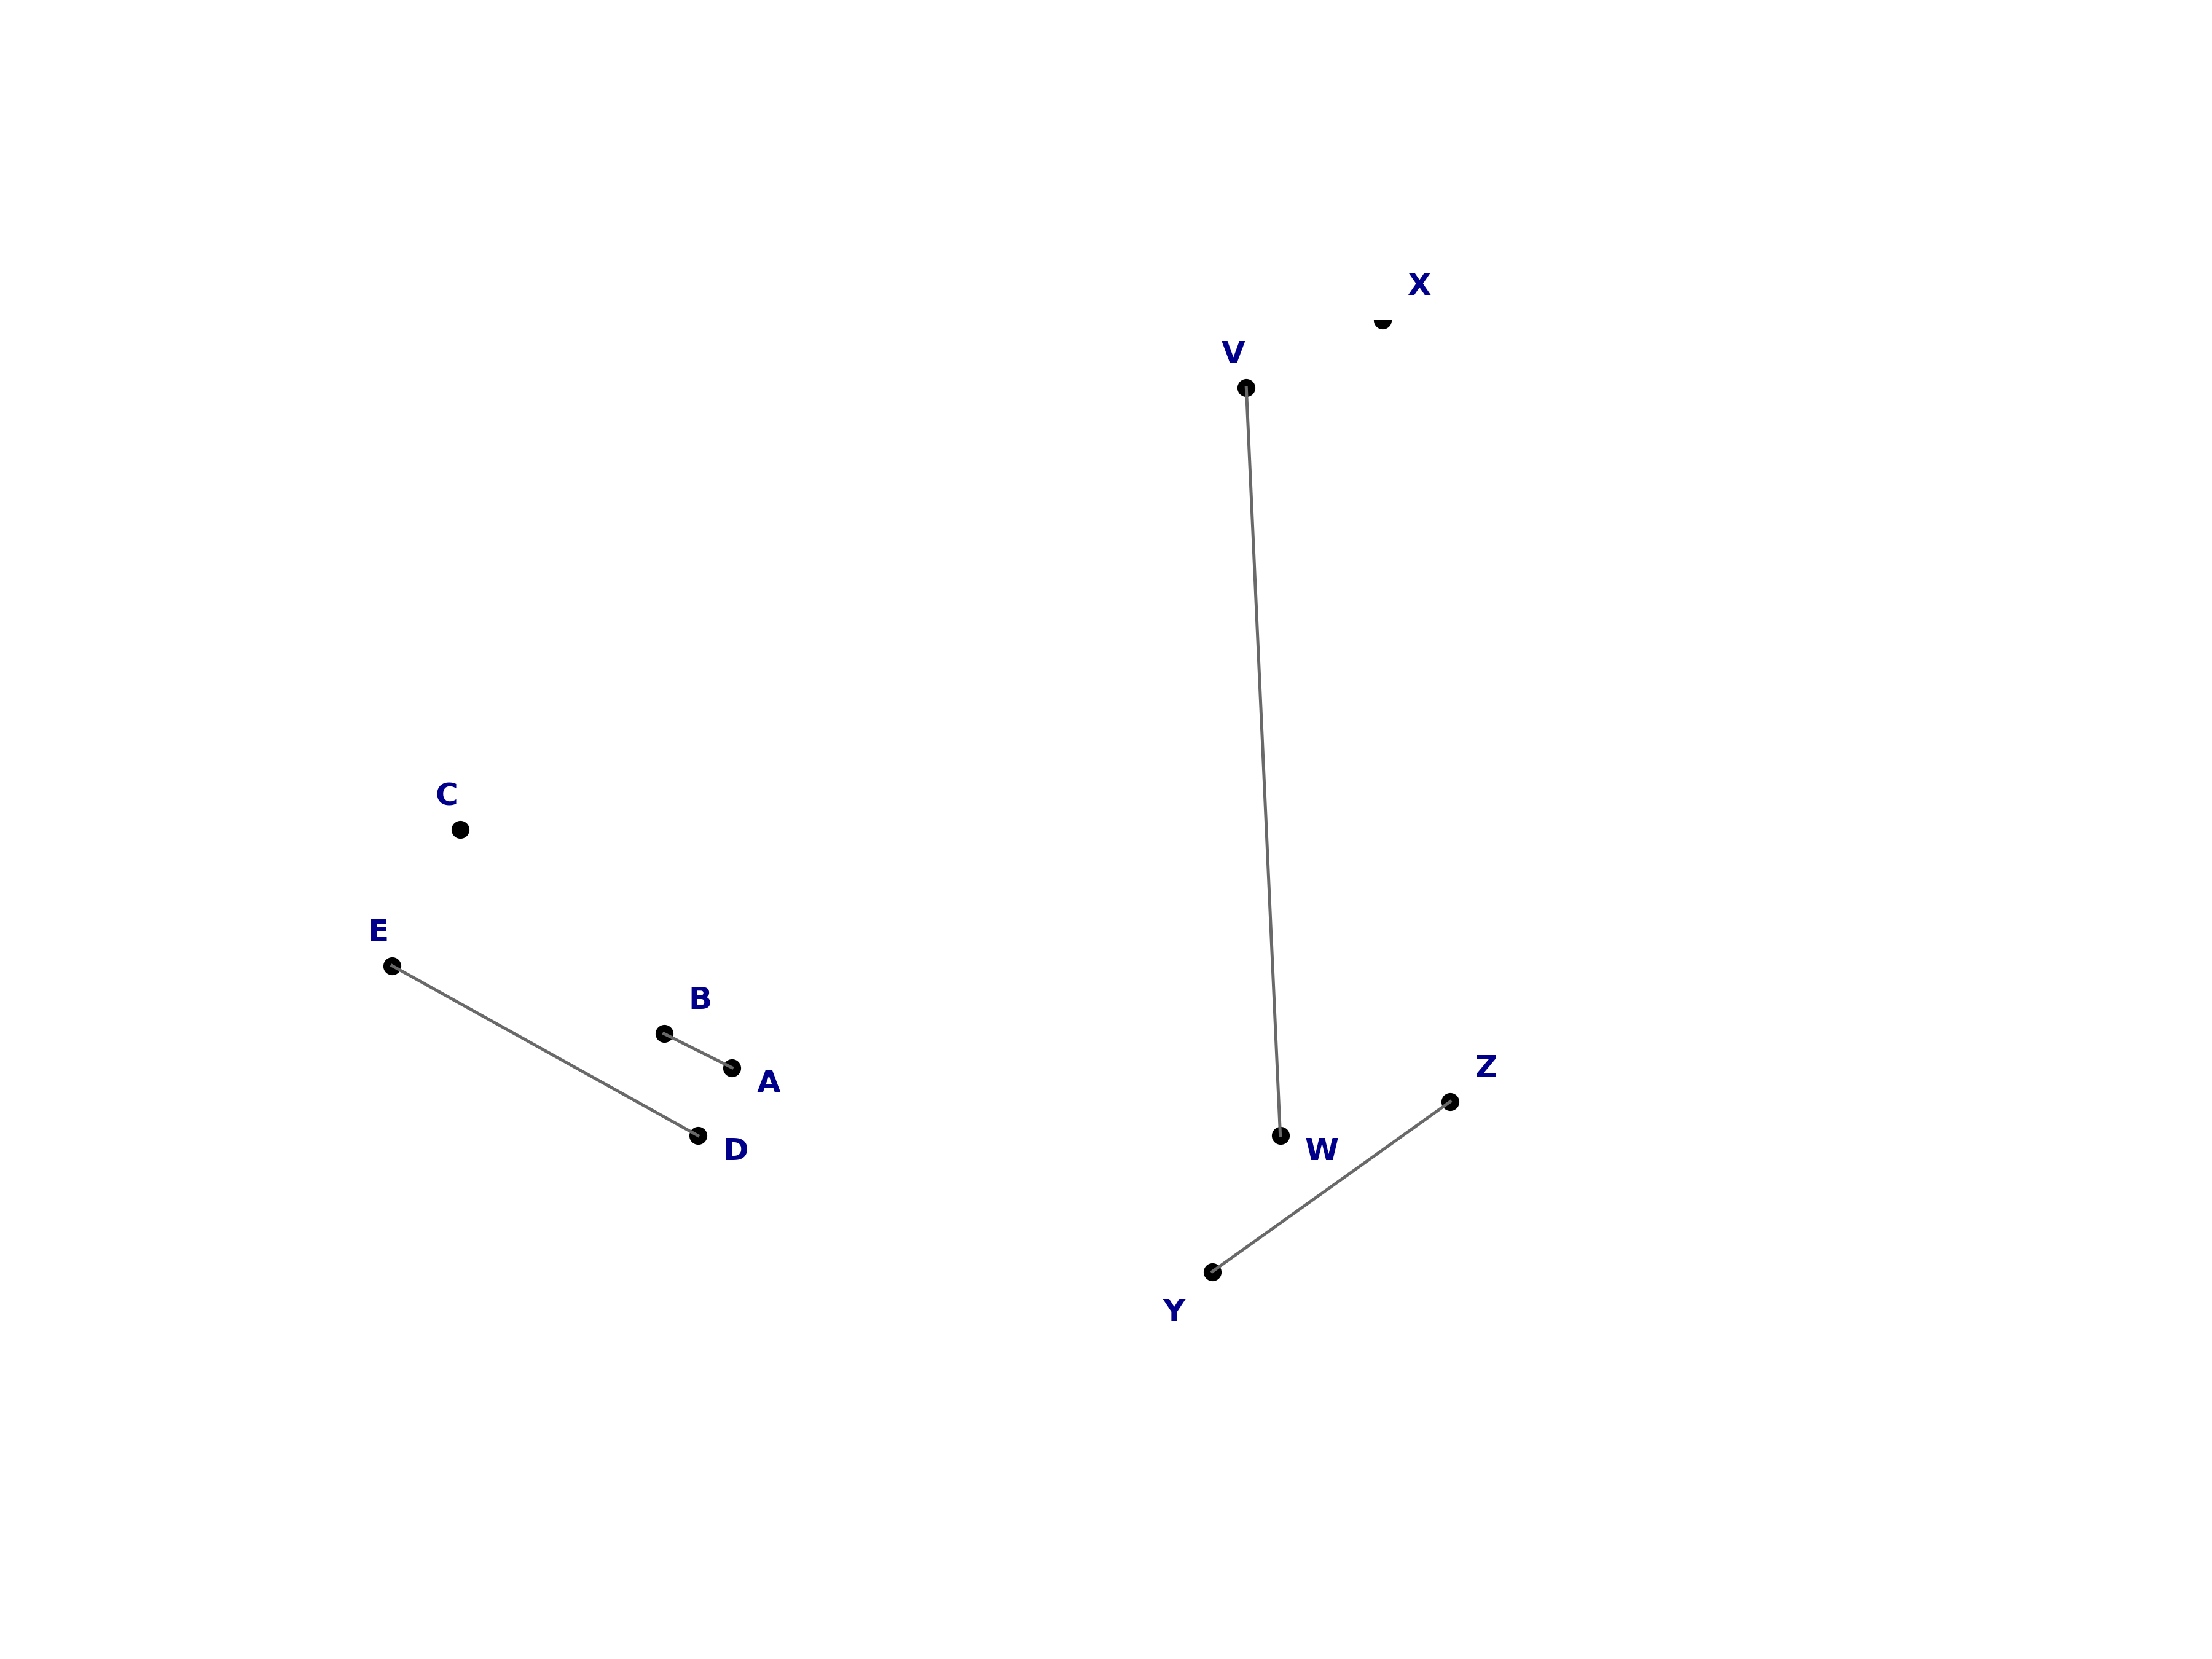 random isomorphic graphs